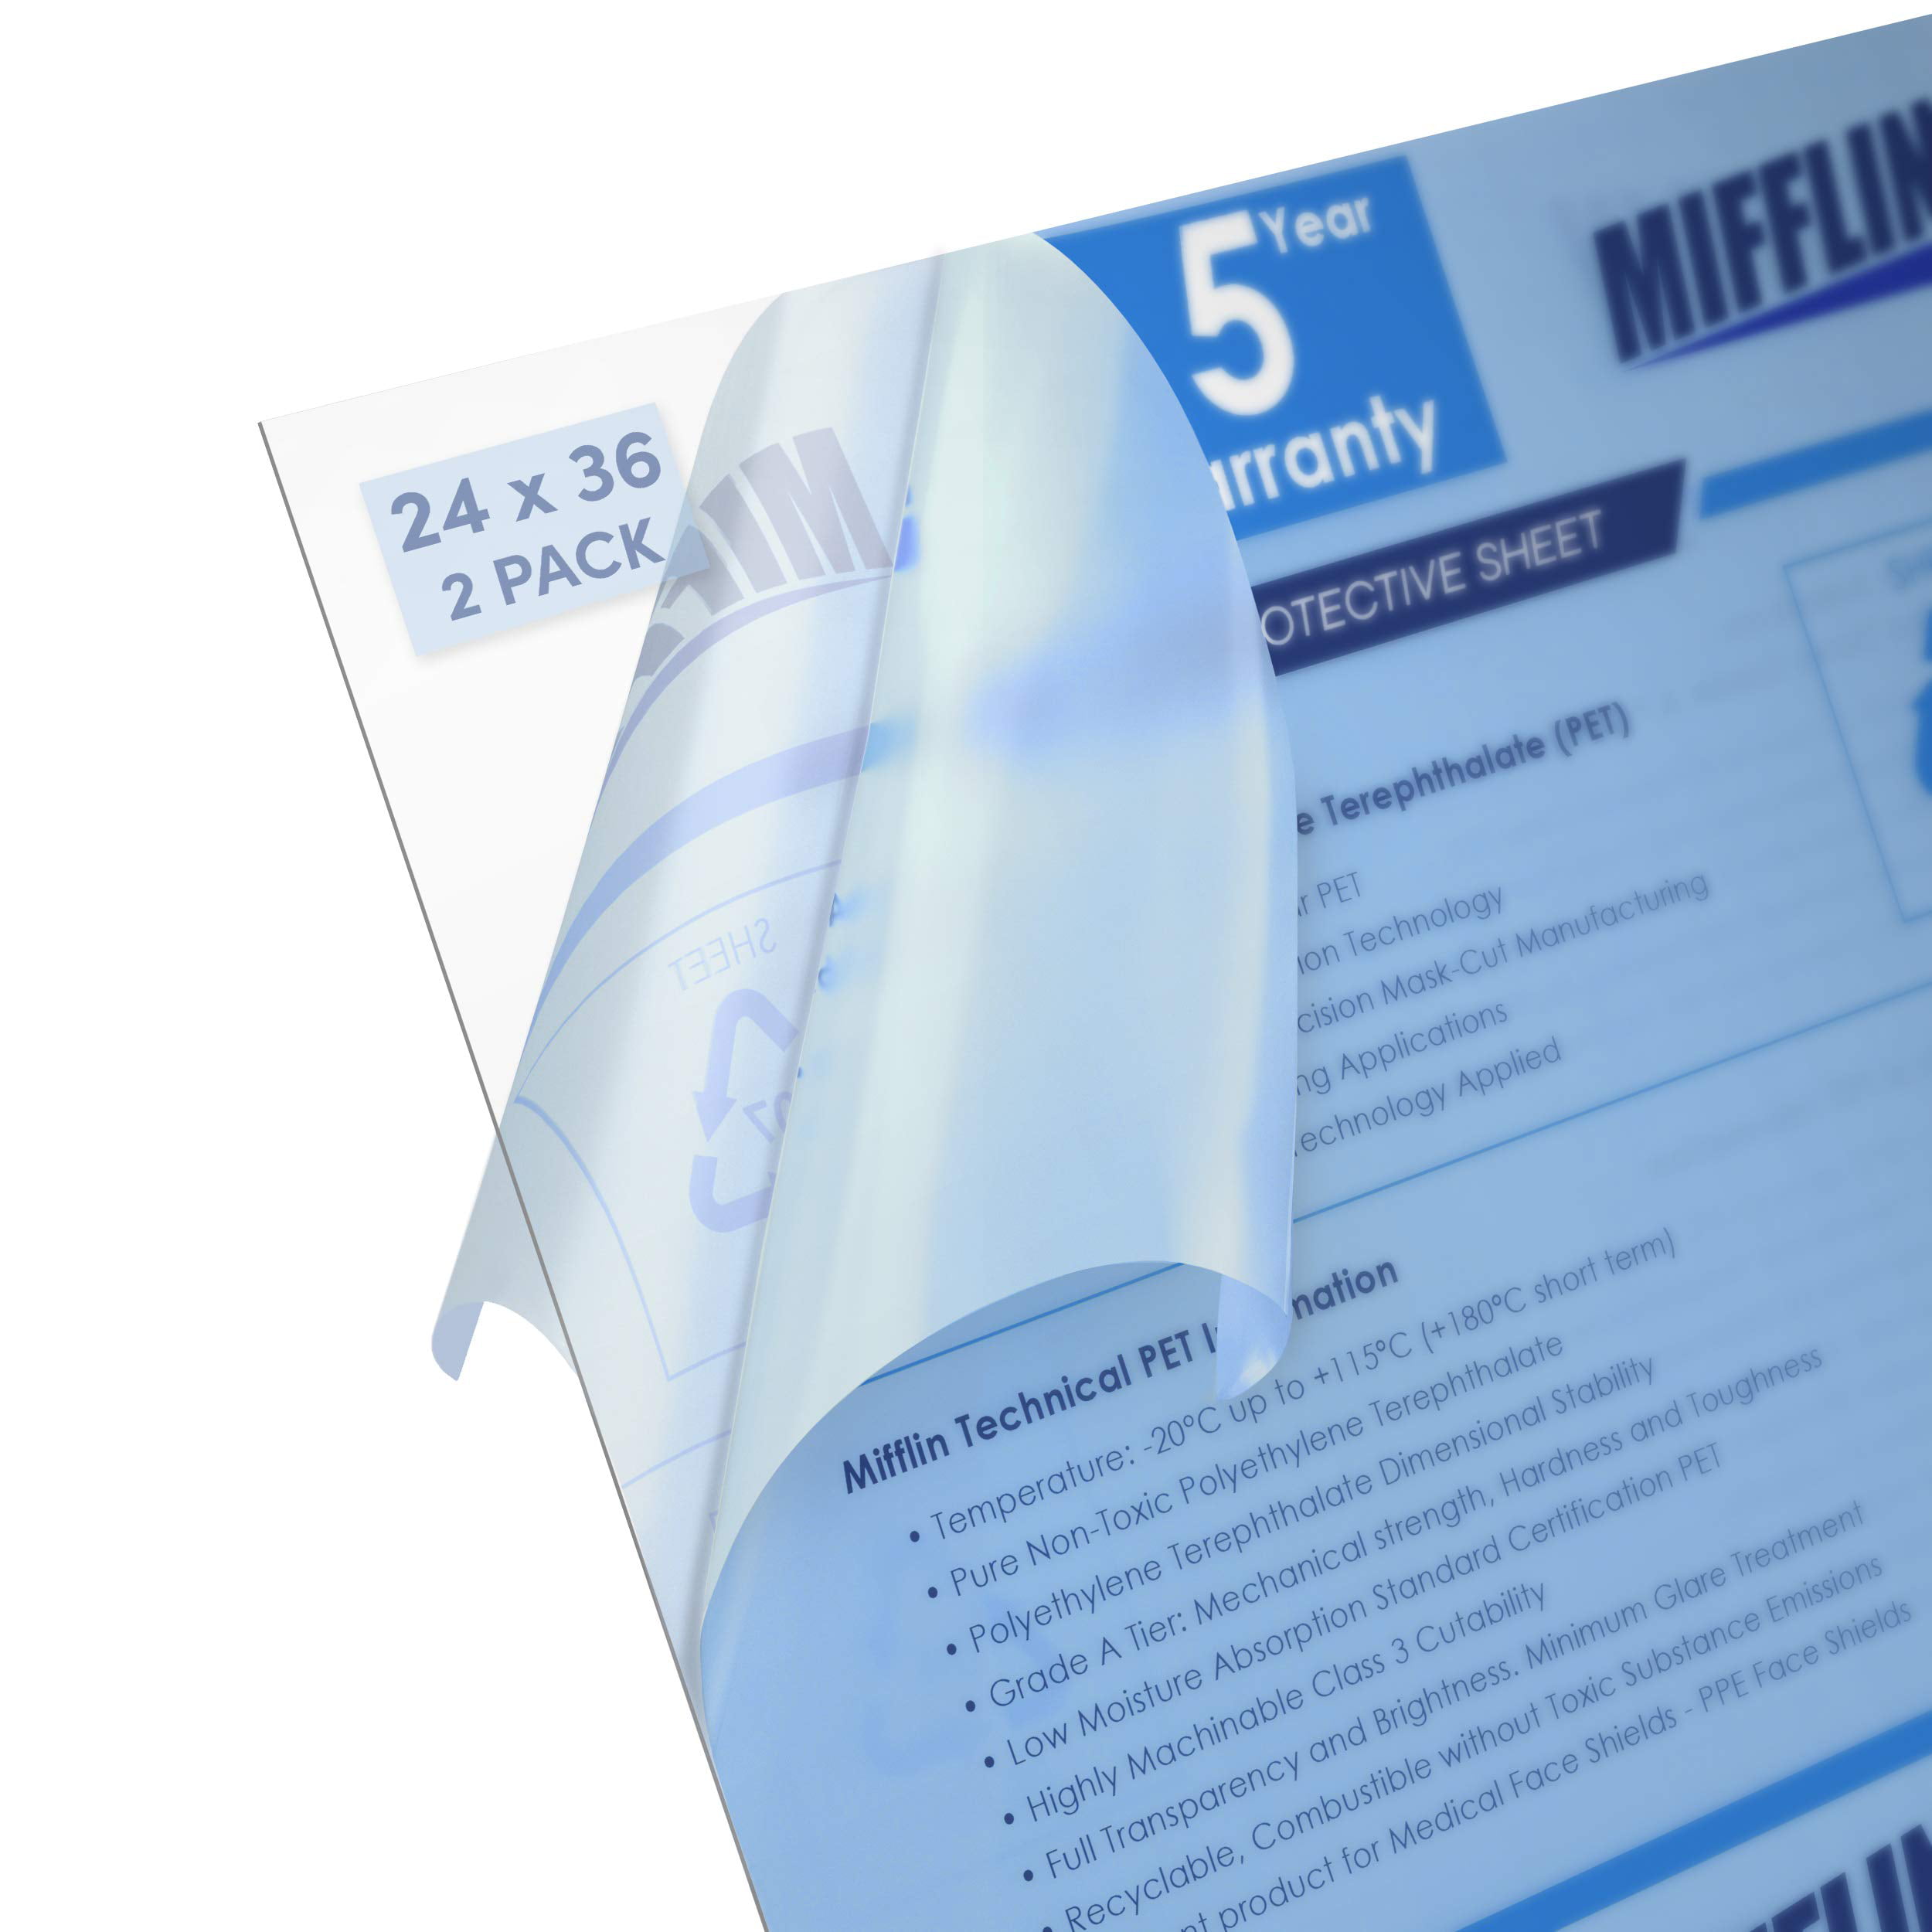 24x36 Clear Plastic Sheet, Thin & Flexible PET Alternative for